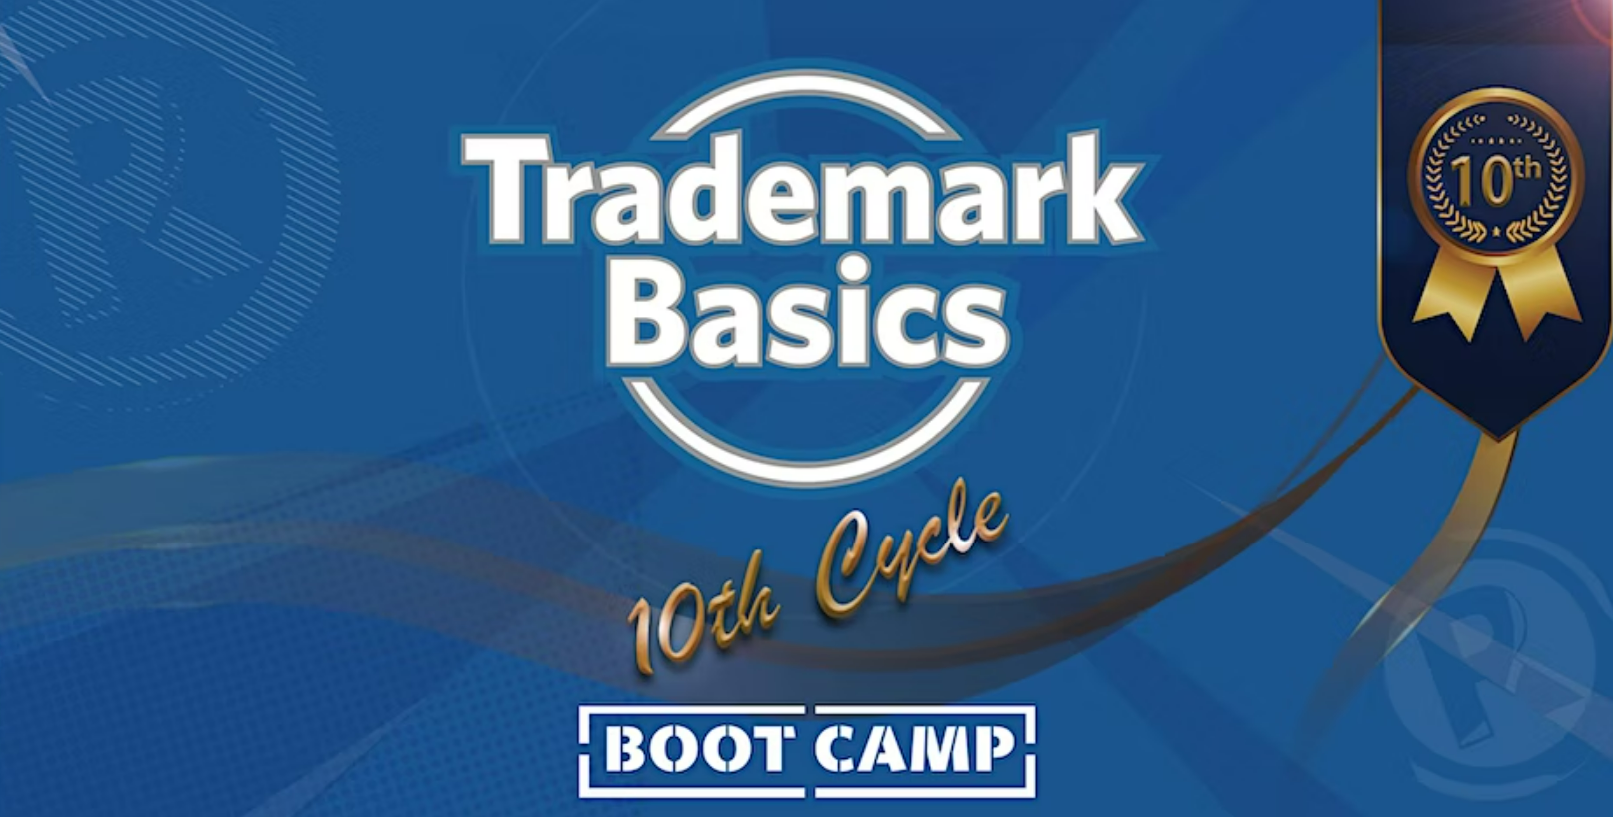 Trademark Basics Boot Camp 10th Cycle